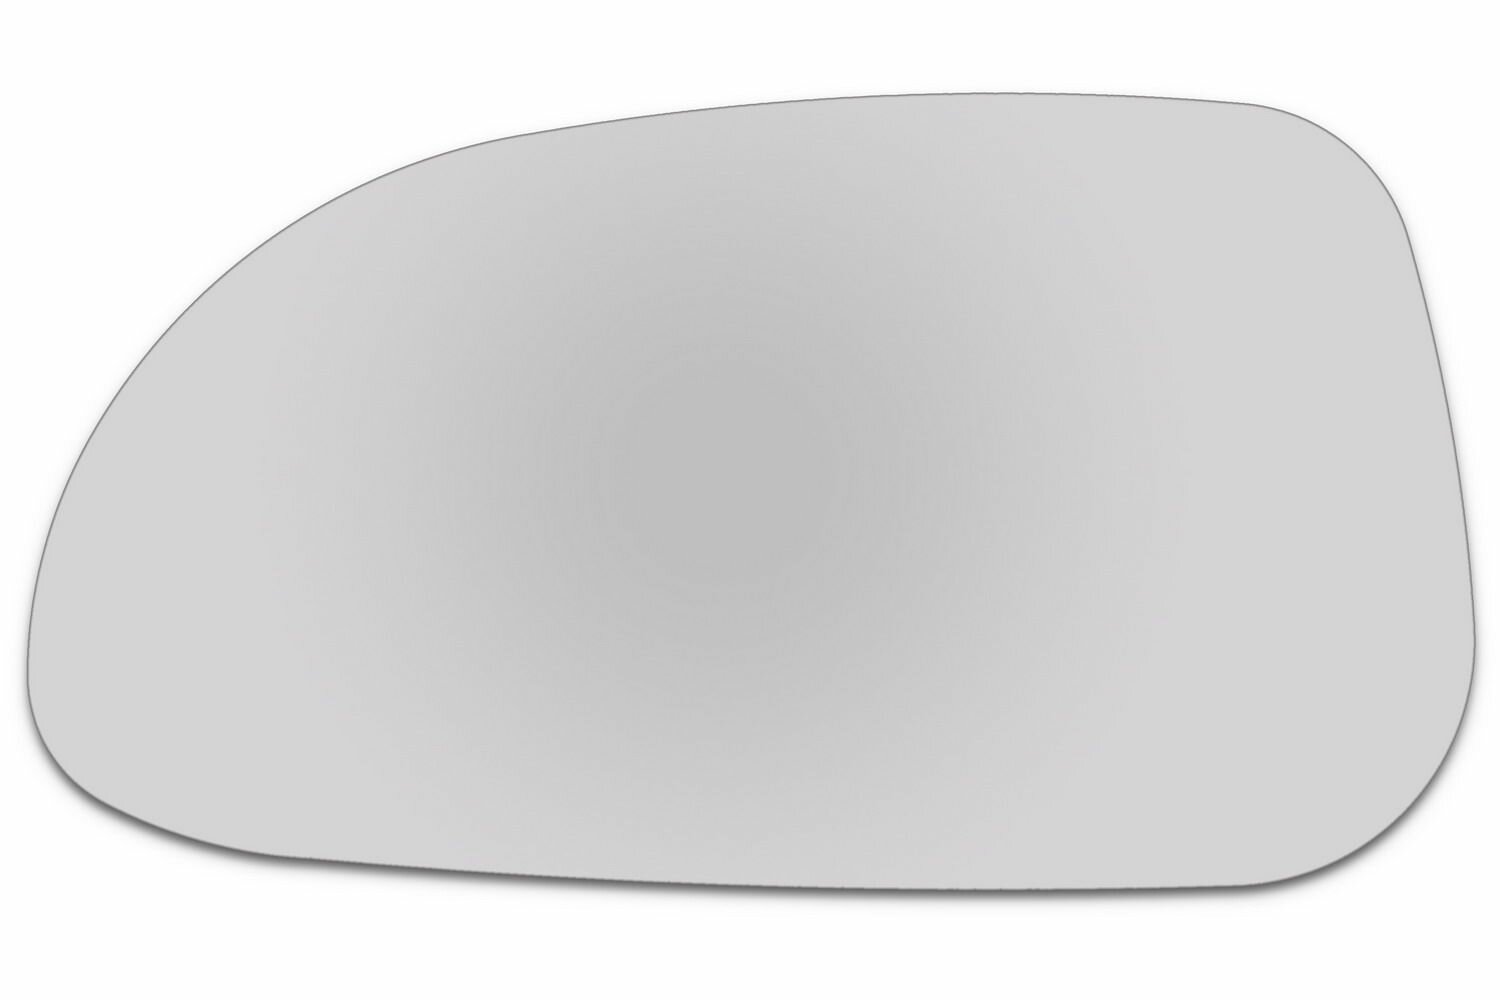 Элемент зеркала CHEVROLET Lacetti c 2003 по 2009 левый сферический без обогрева 16330303